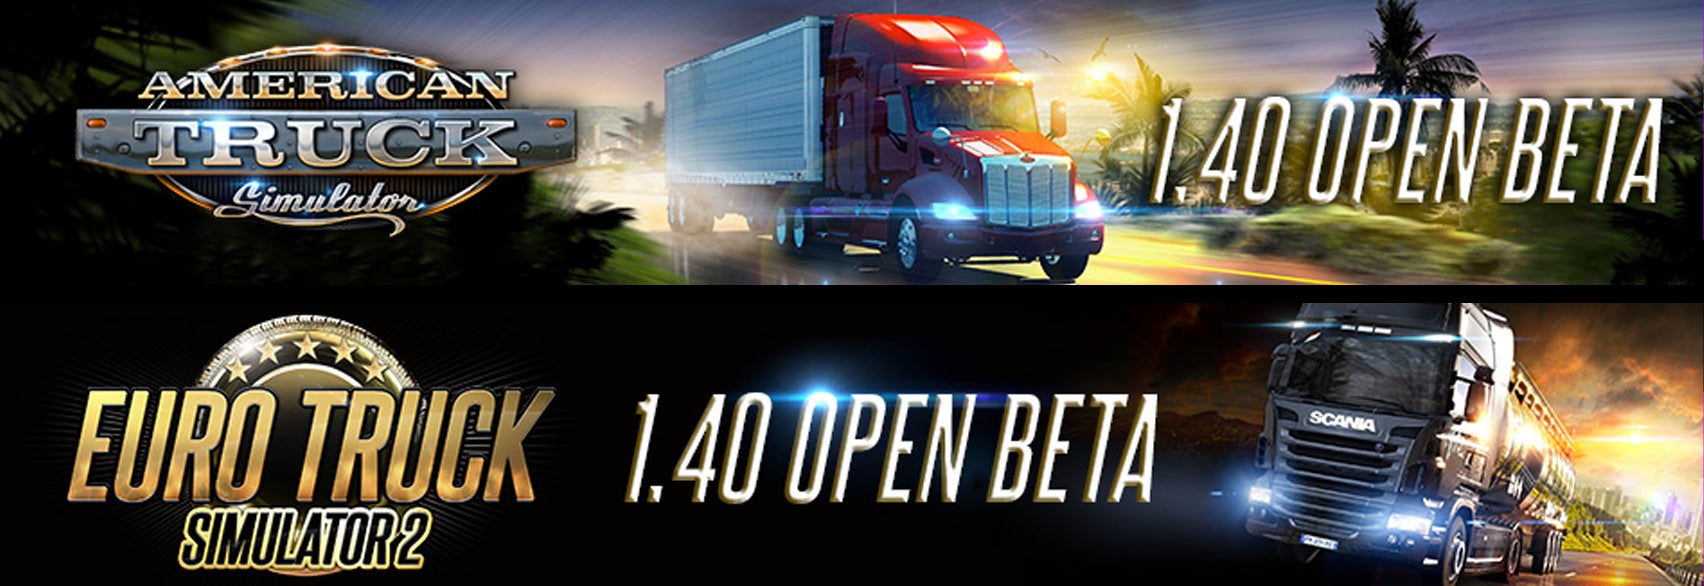 American Truck Simulator & Euro Truck Simulator 2 Open Beta 1.40